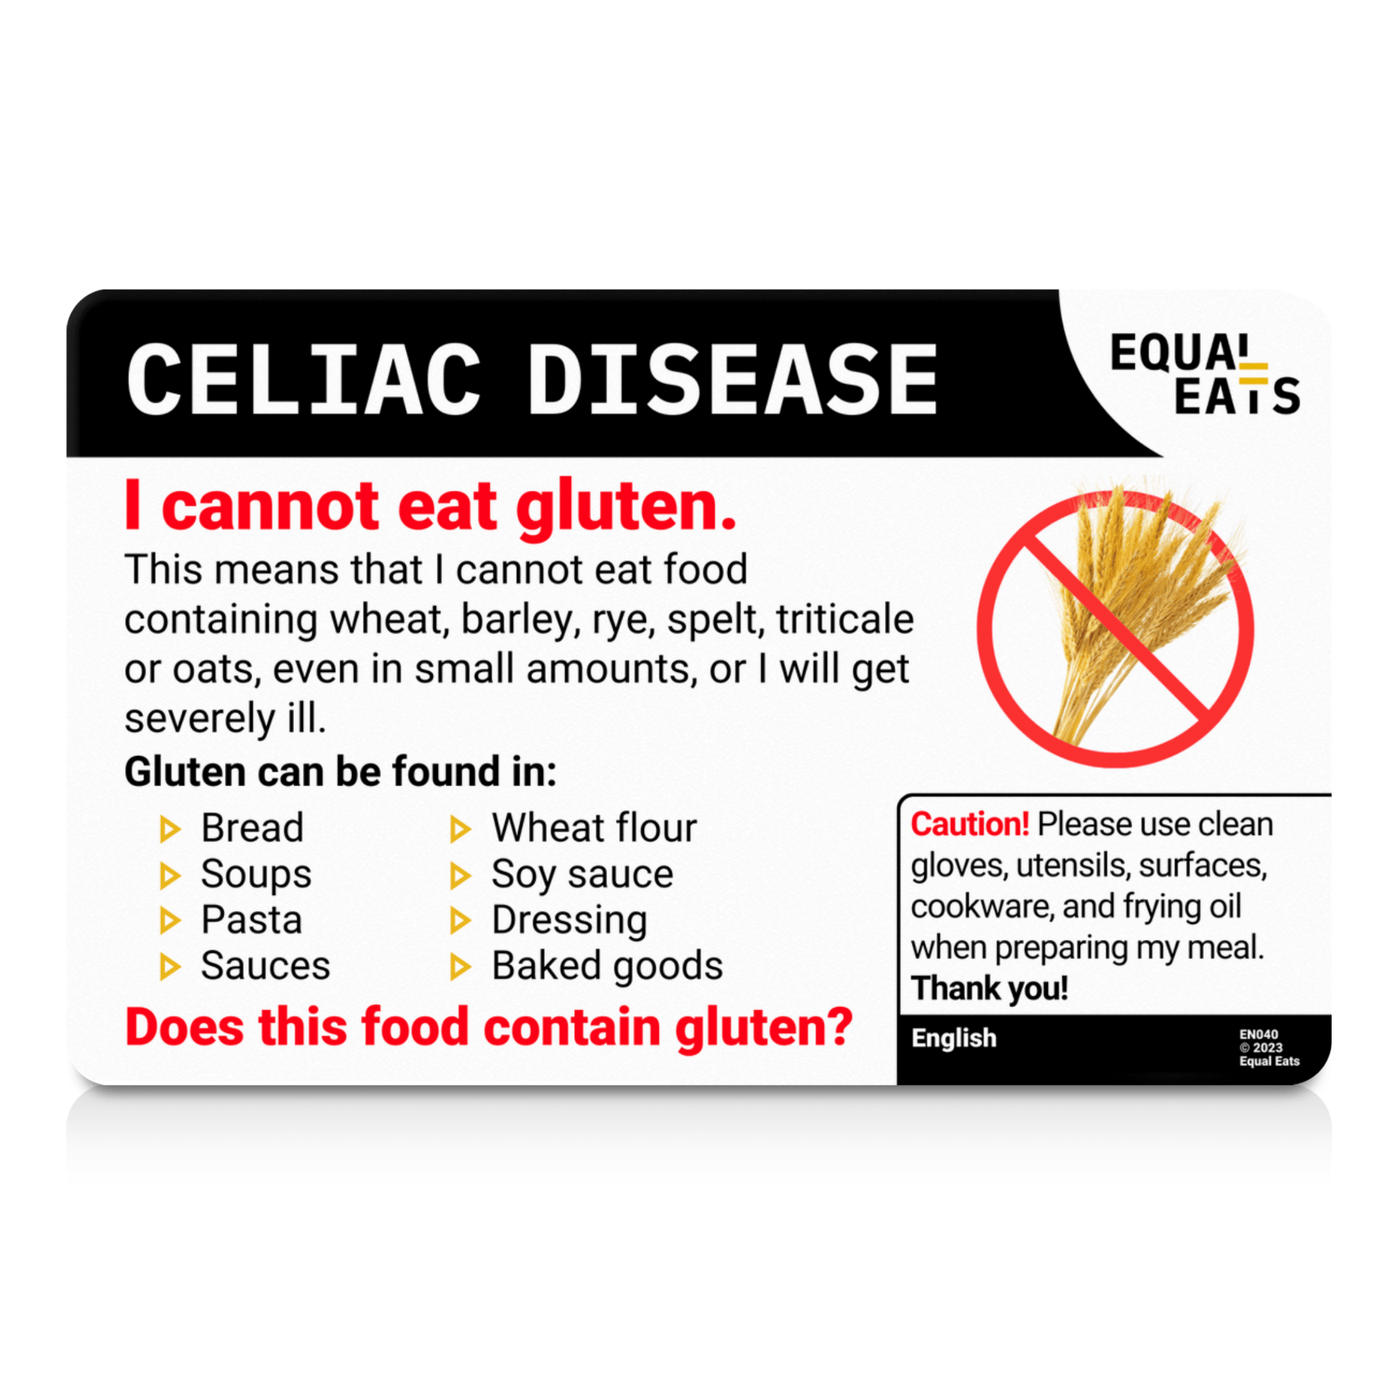 Icelandic Celiac Disease Card